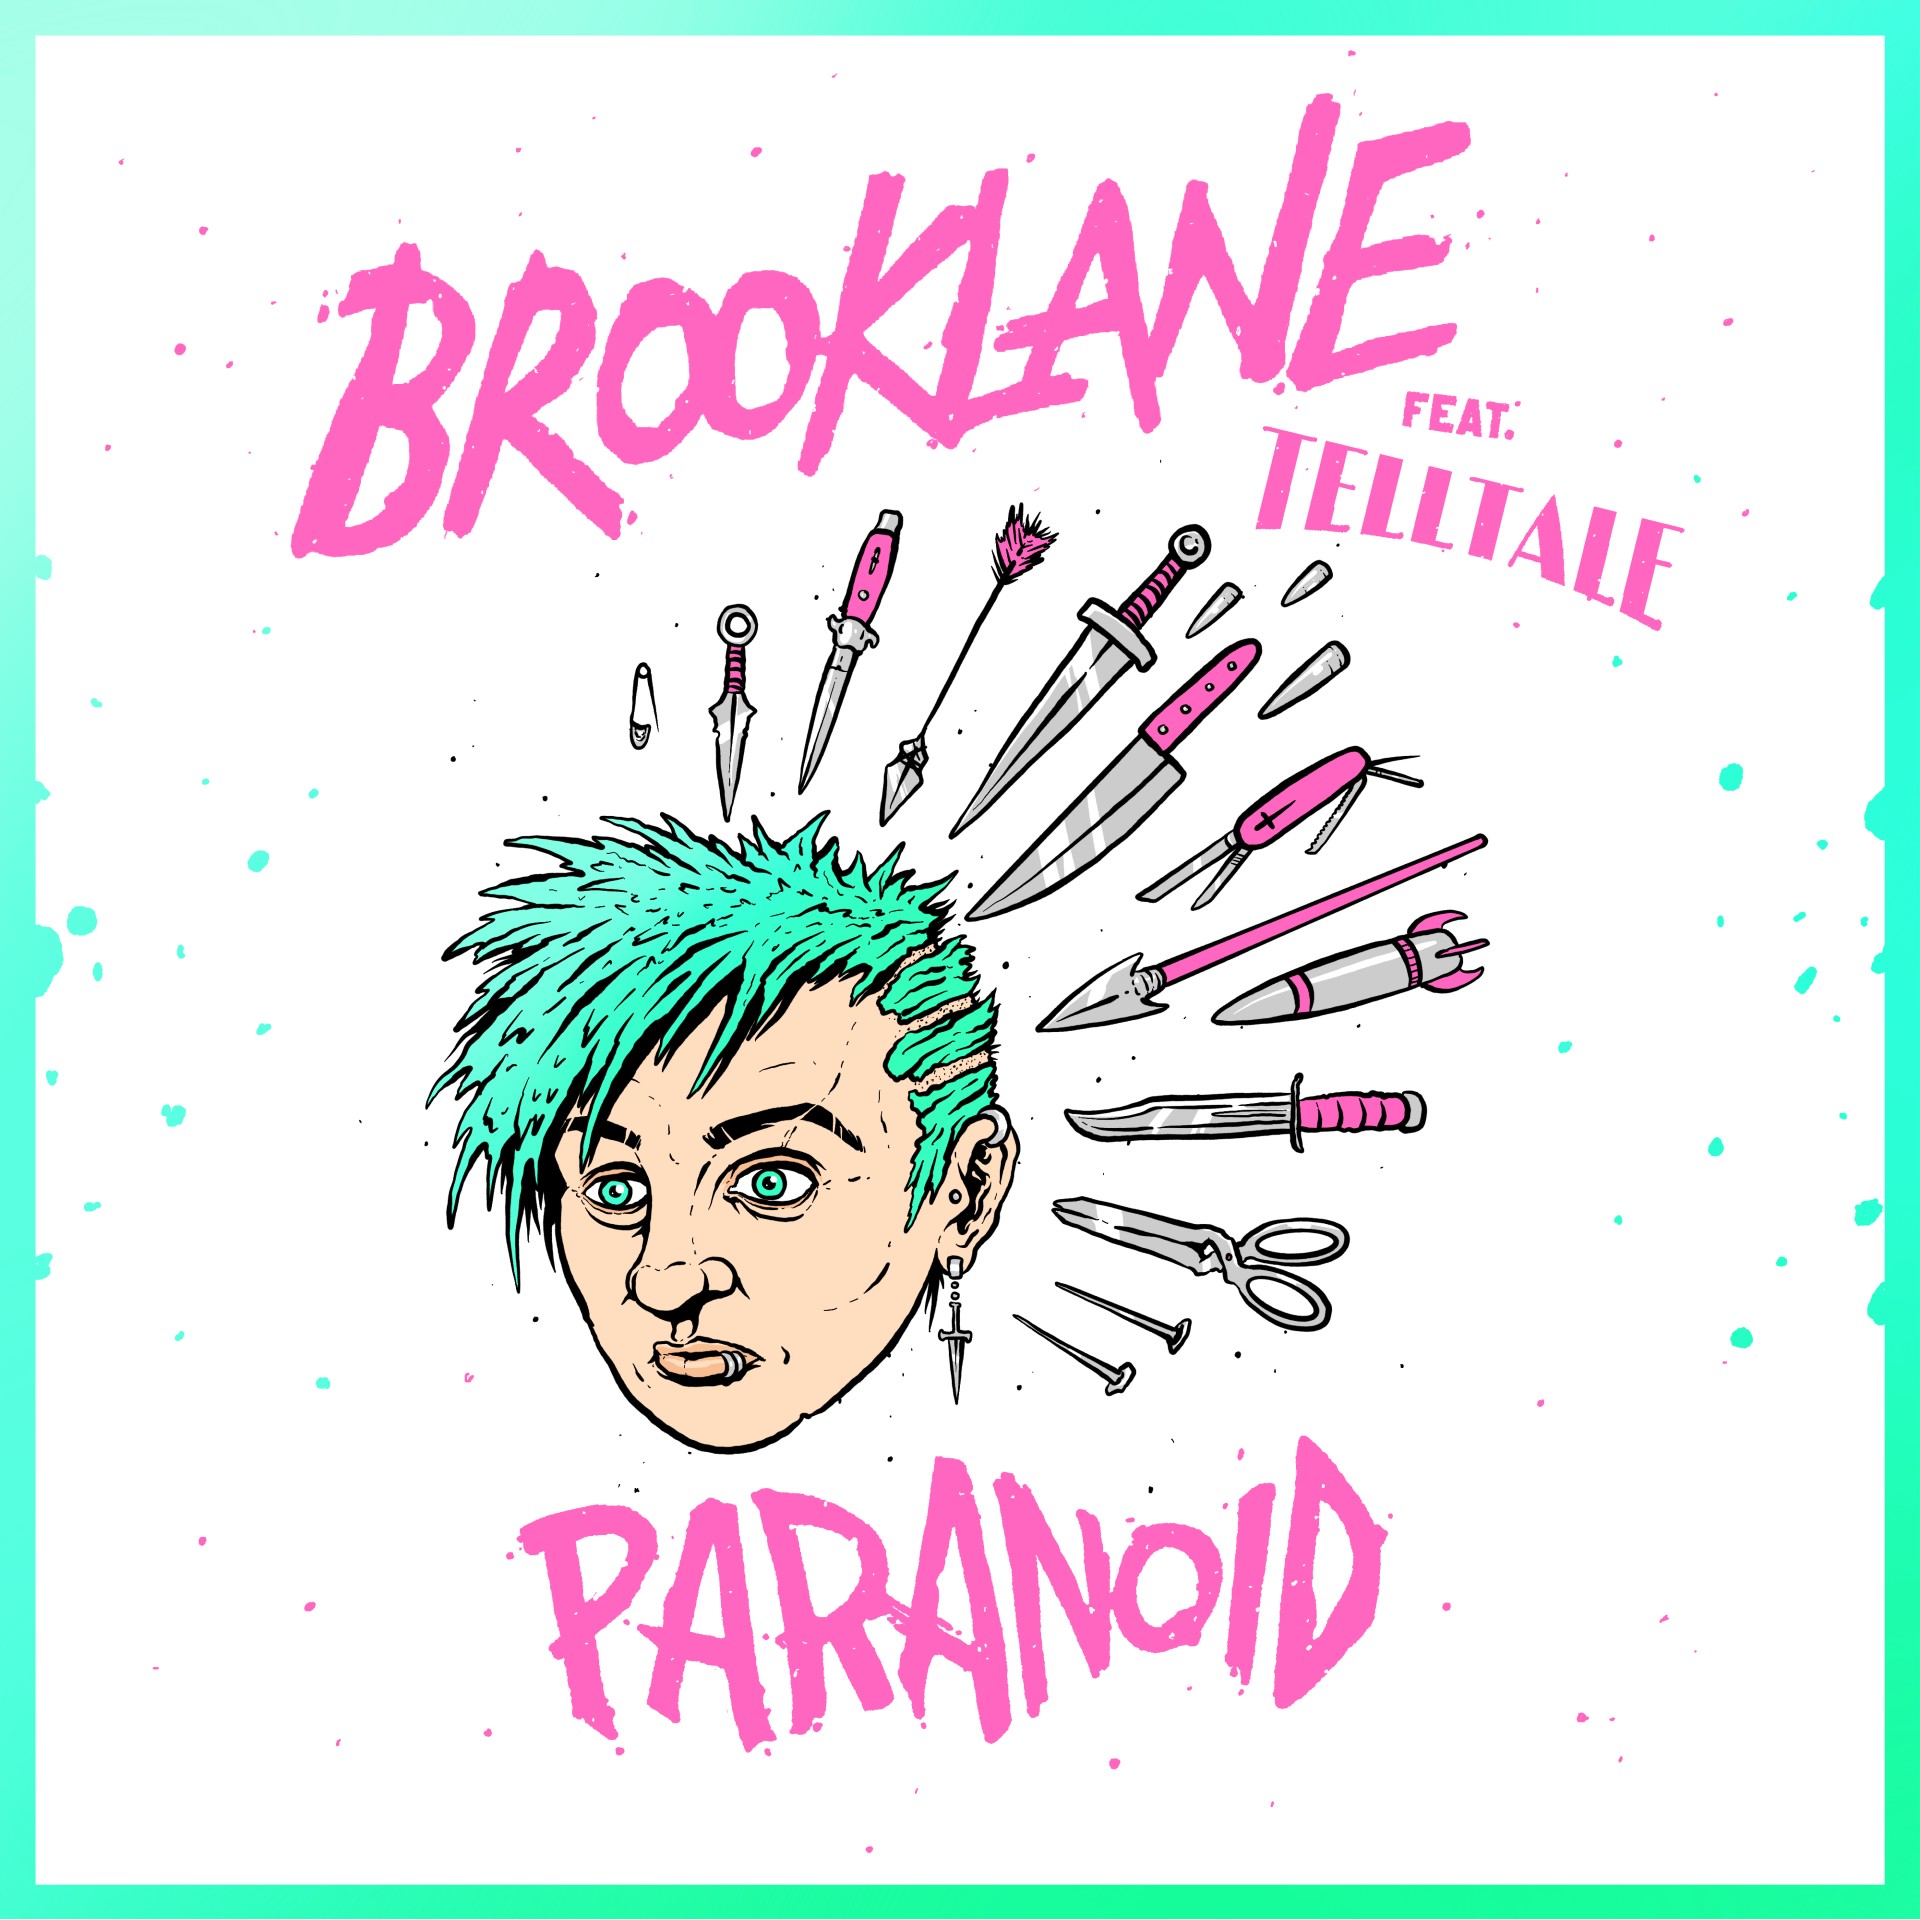 Brooklane feat. Telltale “Paranoid” single artwork